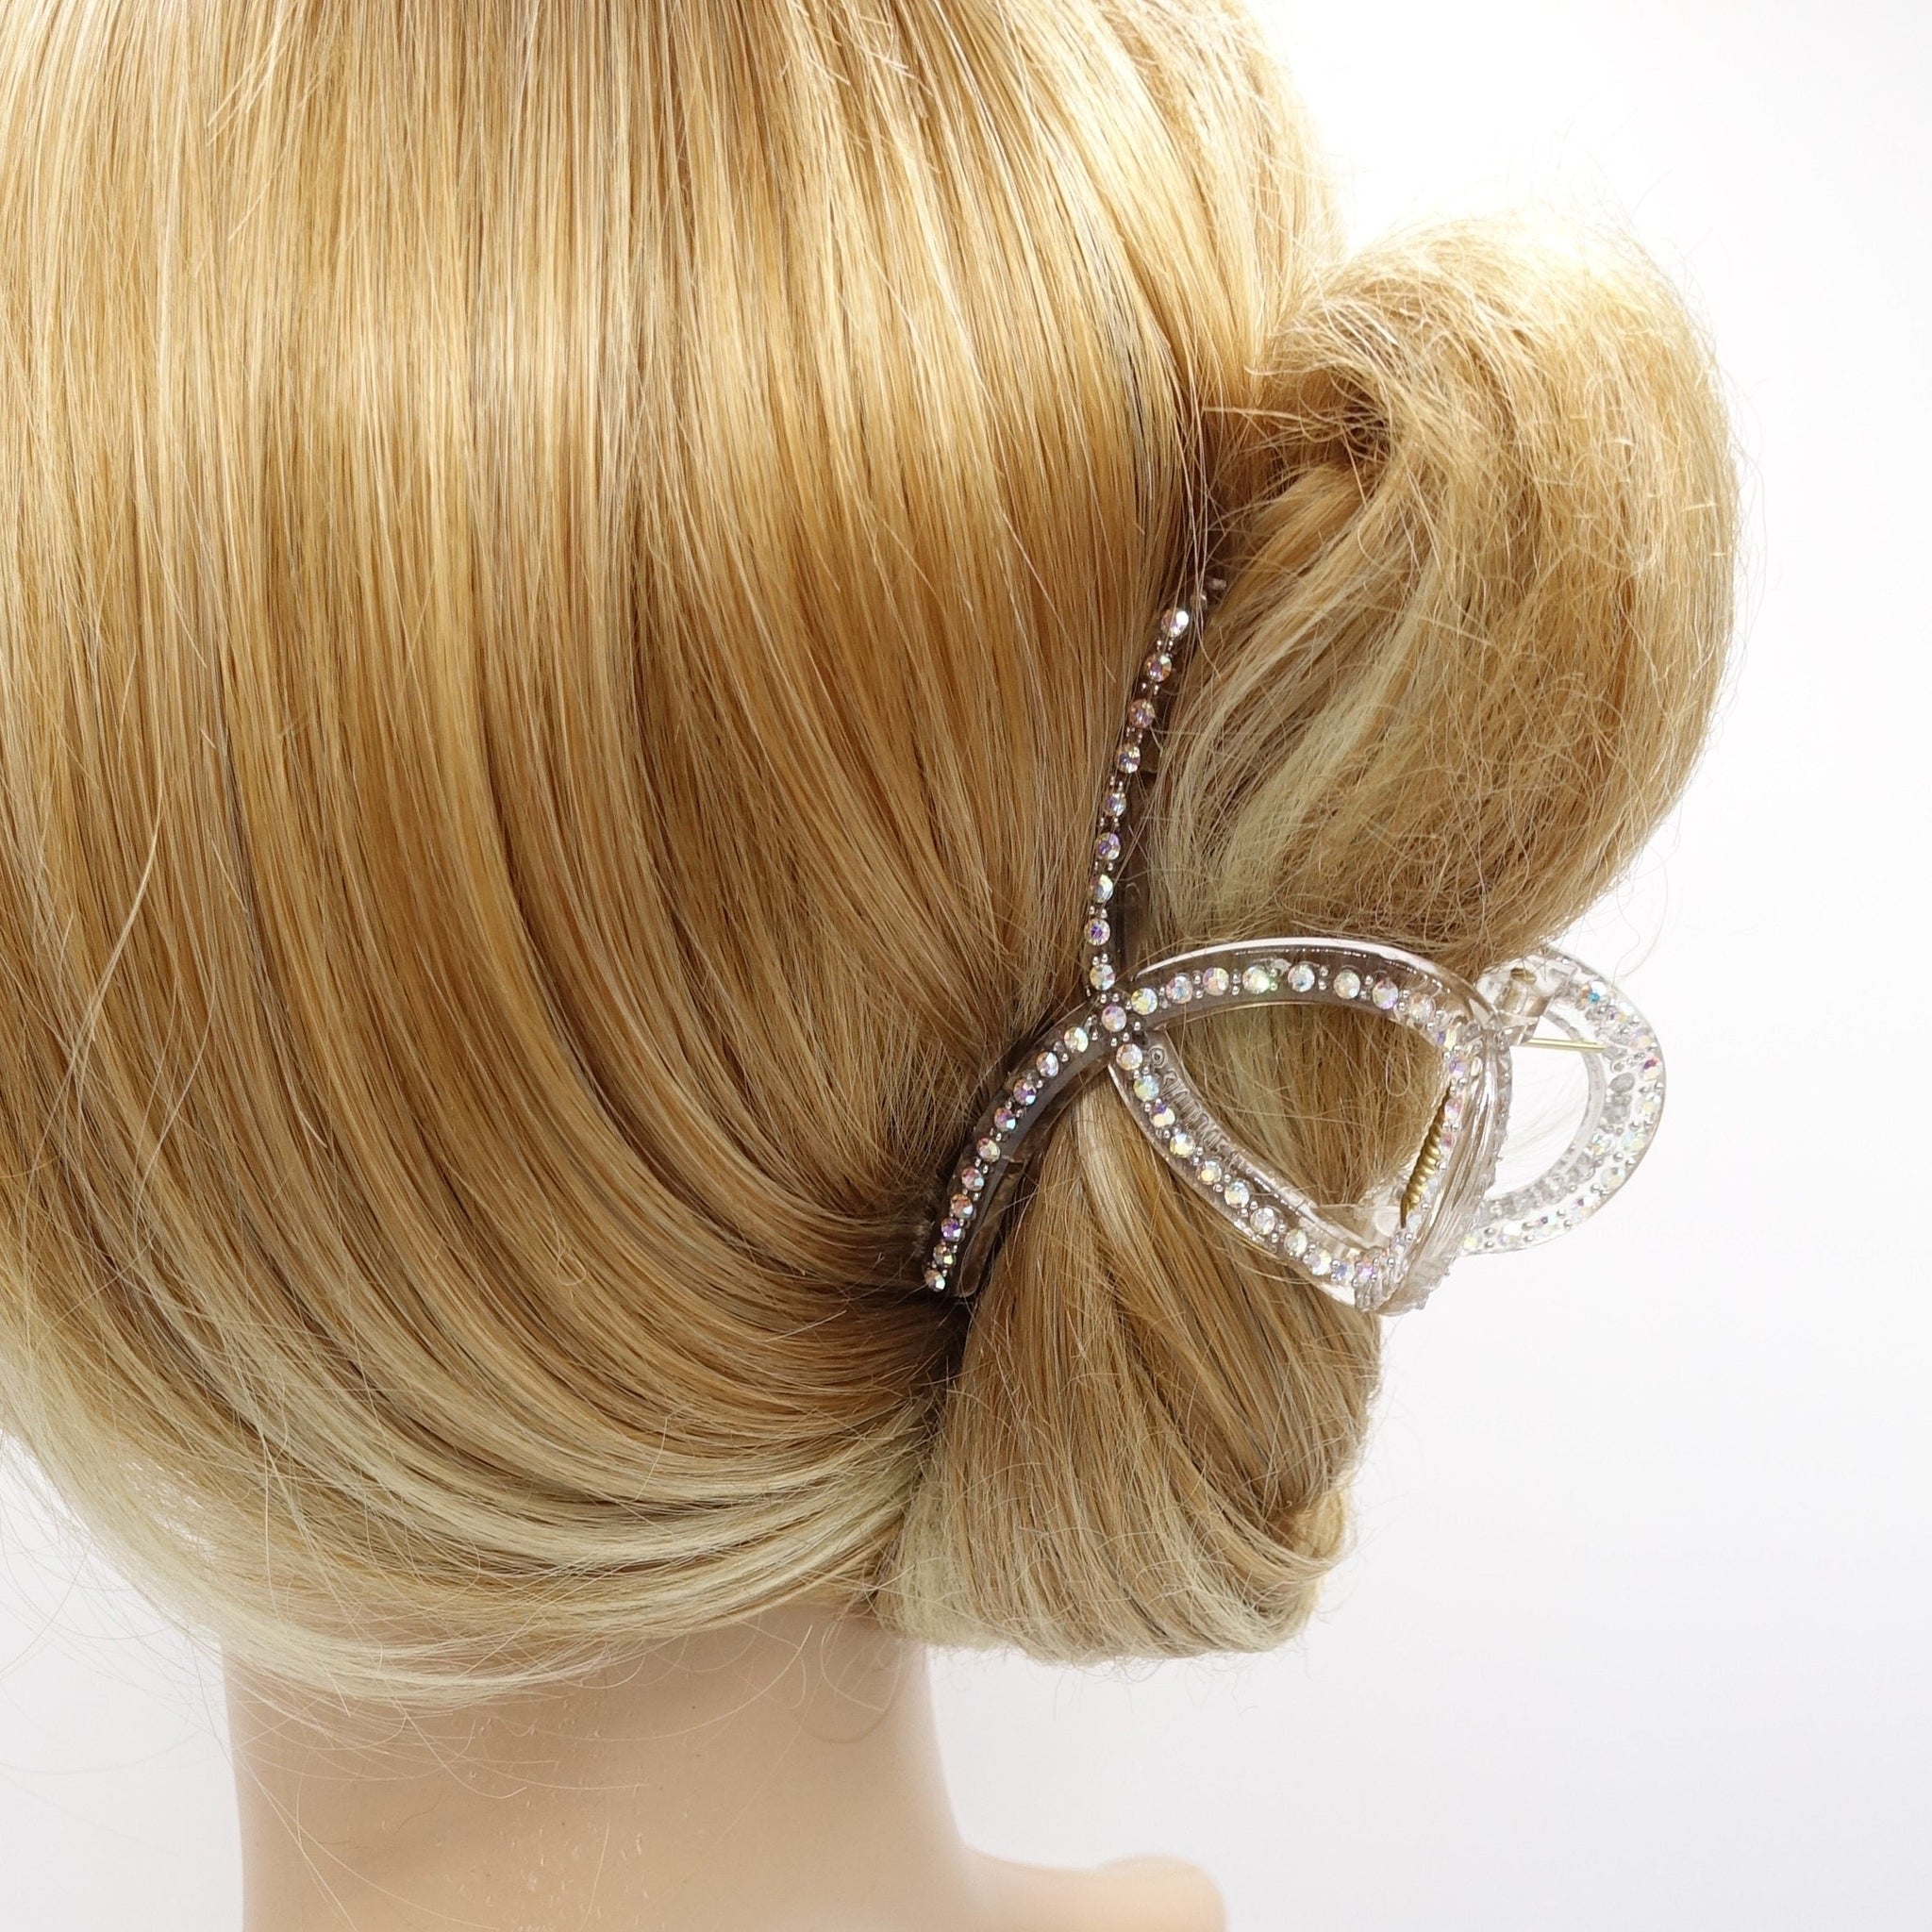 veryshine.com Hair Claw Clear AB Rhinestoe ribbon hair claw, bling hair accessory for women